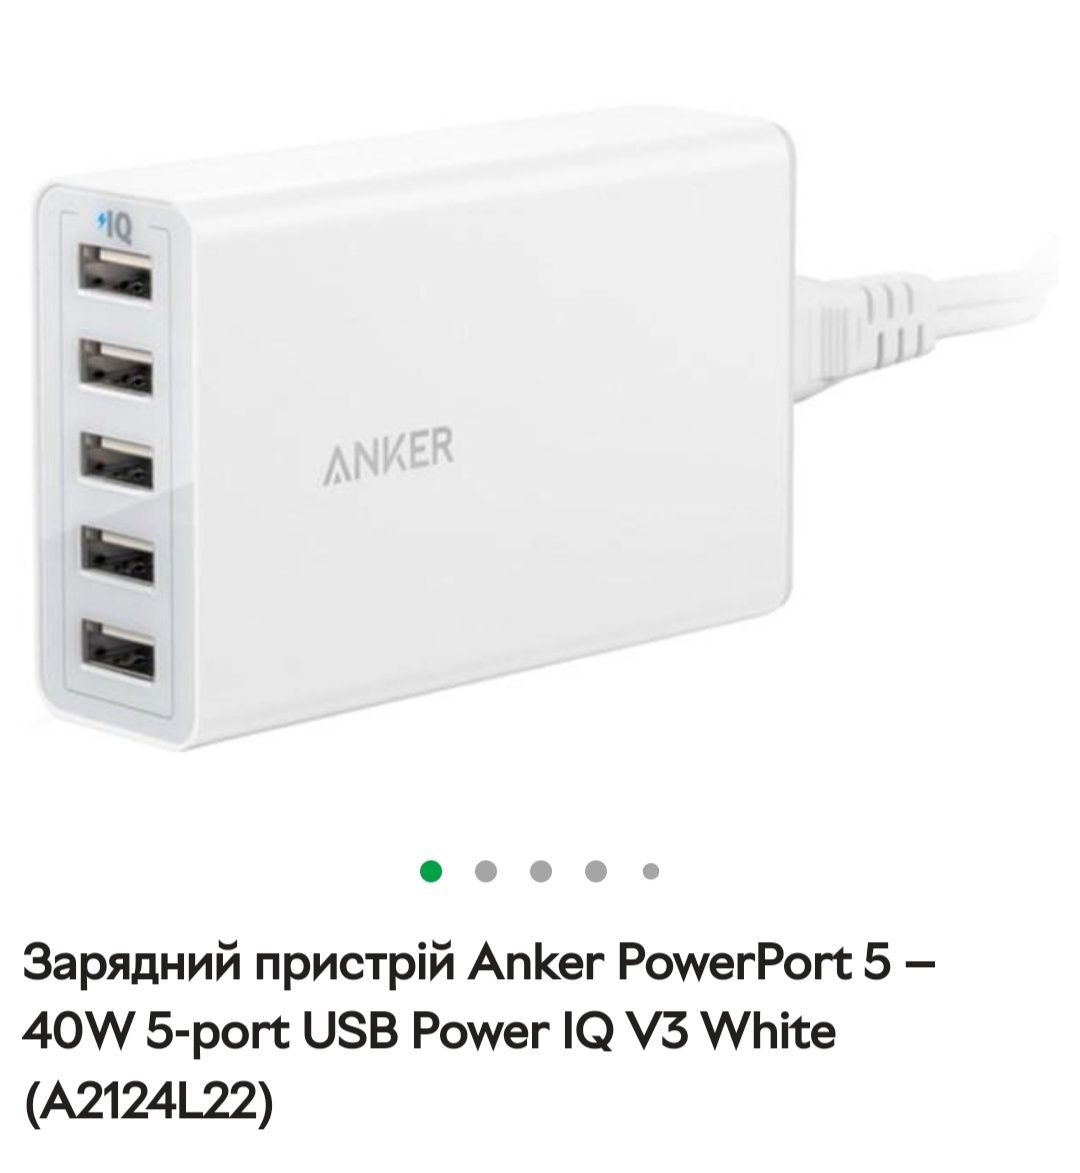 anker powerport 5 port 40w 5-port usb charger